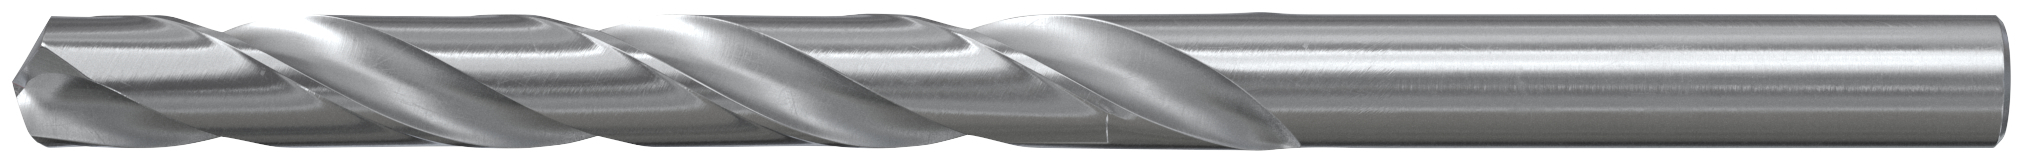 fischer Set di 25 punte trapano per metallo HSS-G (1-13mm) in acciaio (25 Pz.) Set di punte professionaliper metallo in acciaio HSS-G.